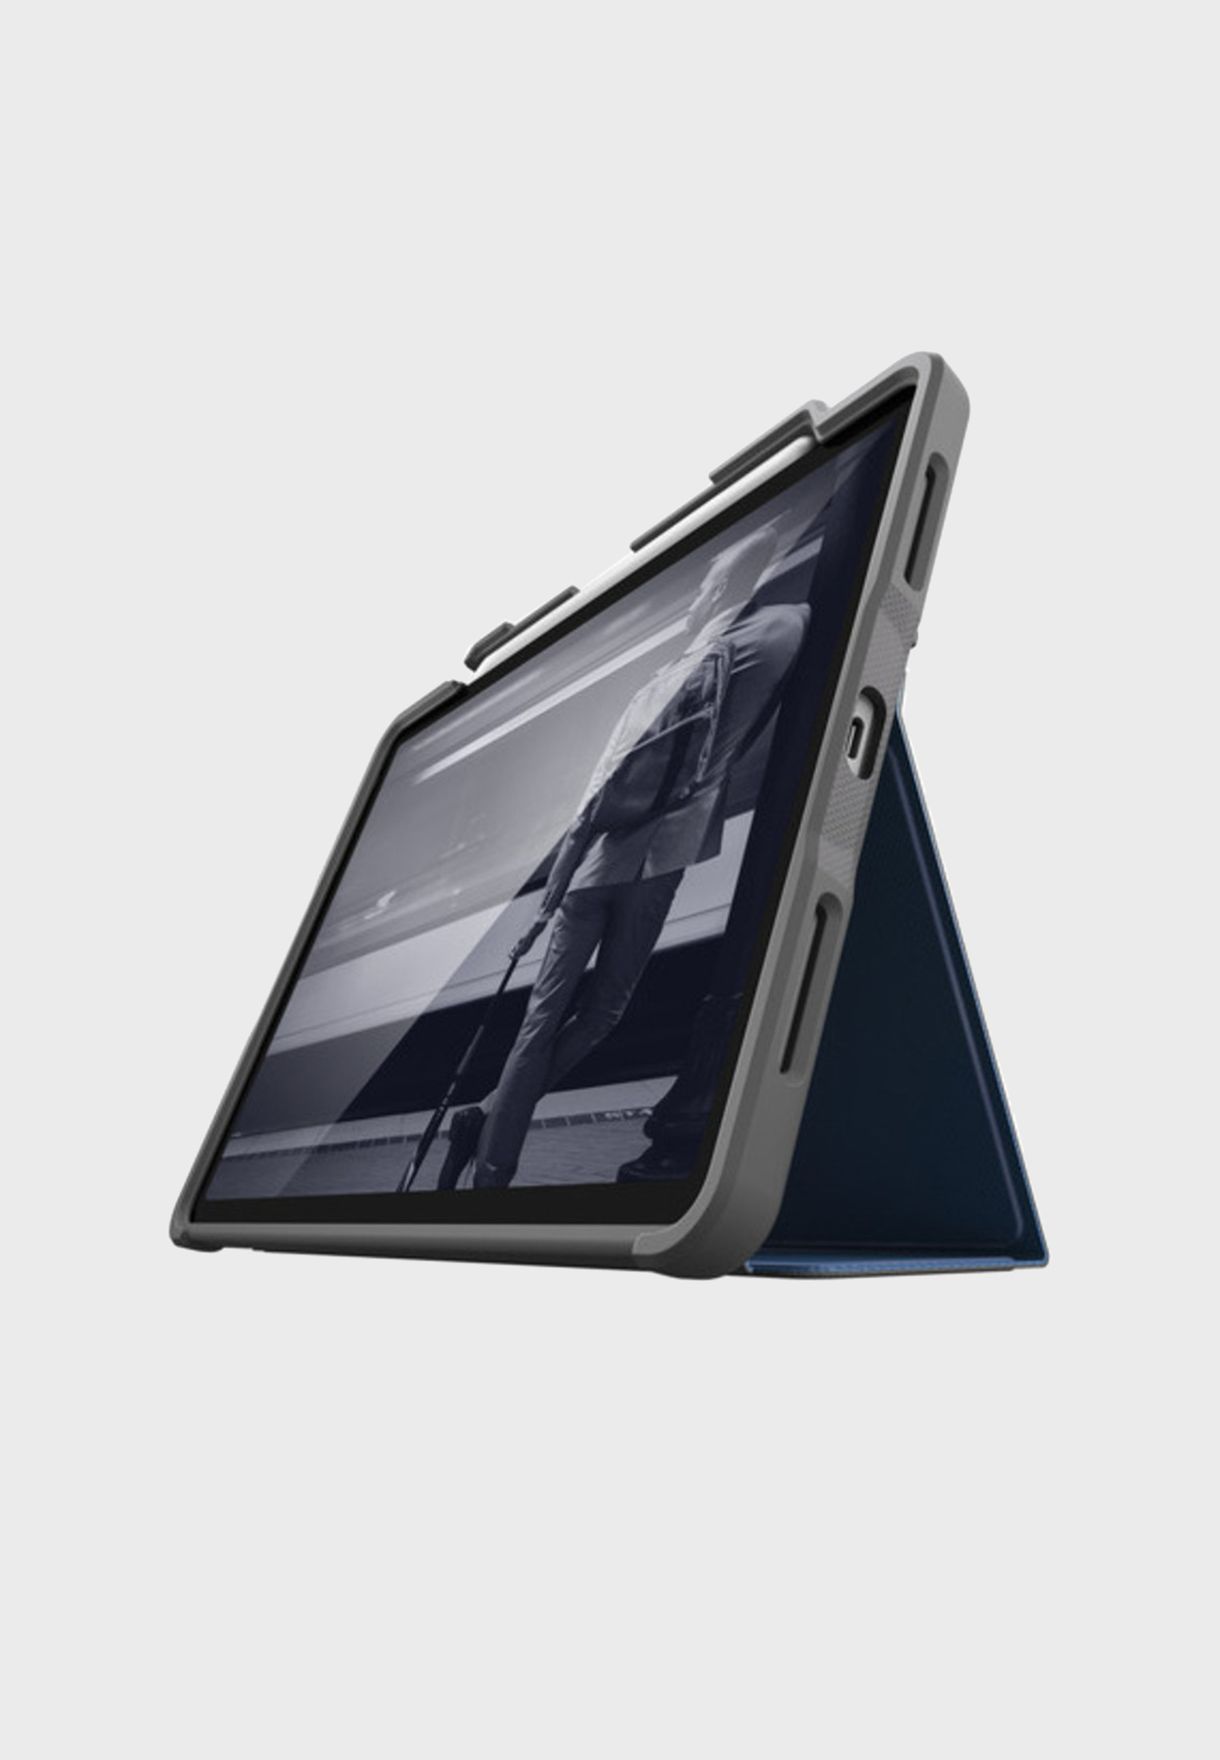 Rugged Case Plus iPad Pro 11"